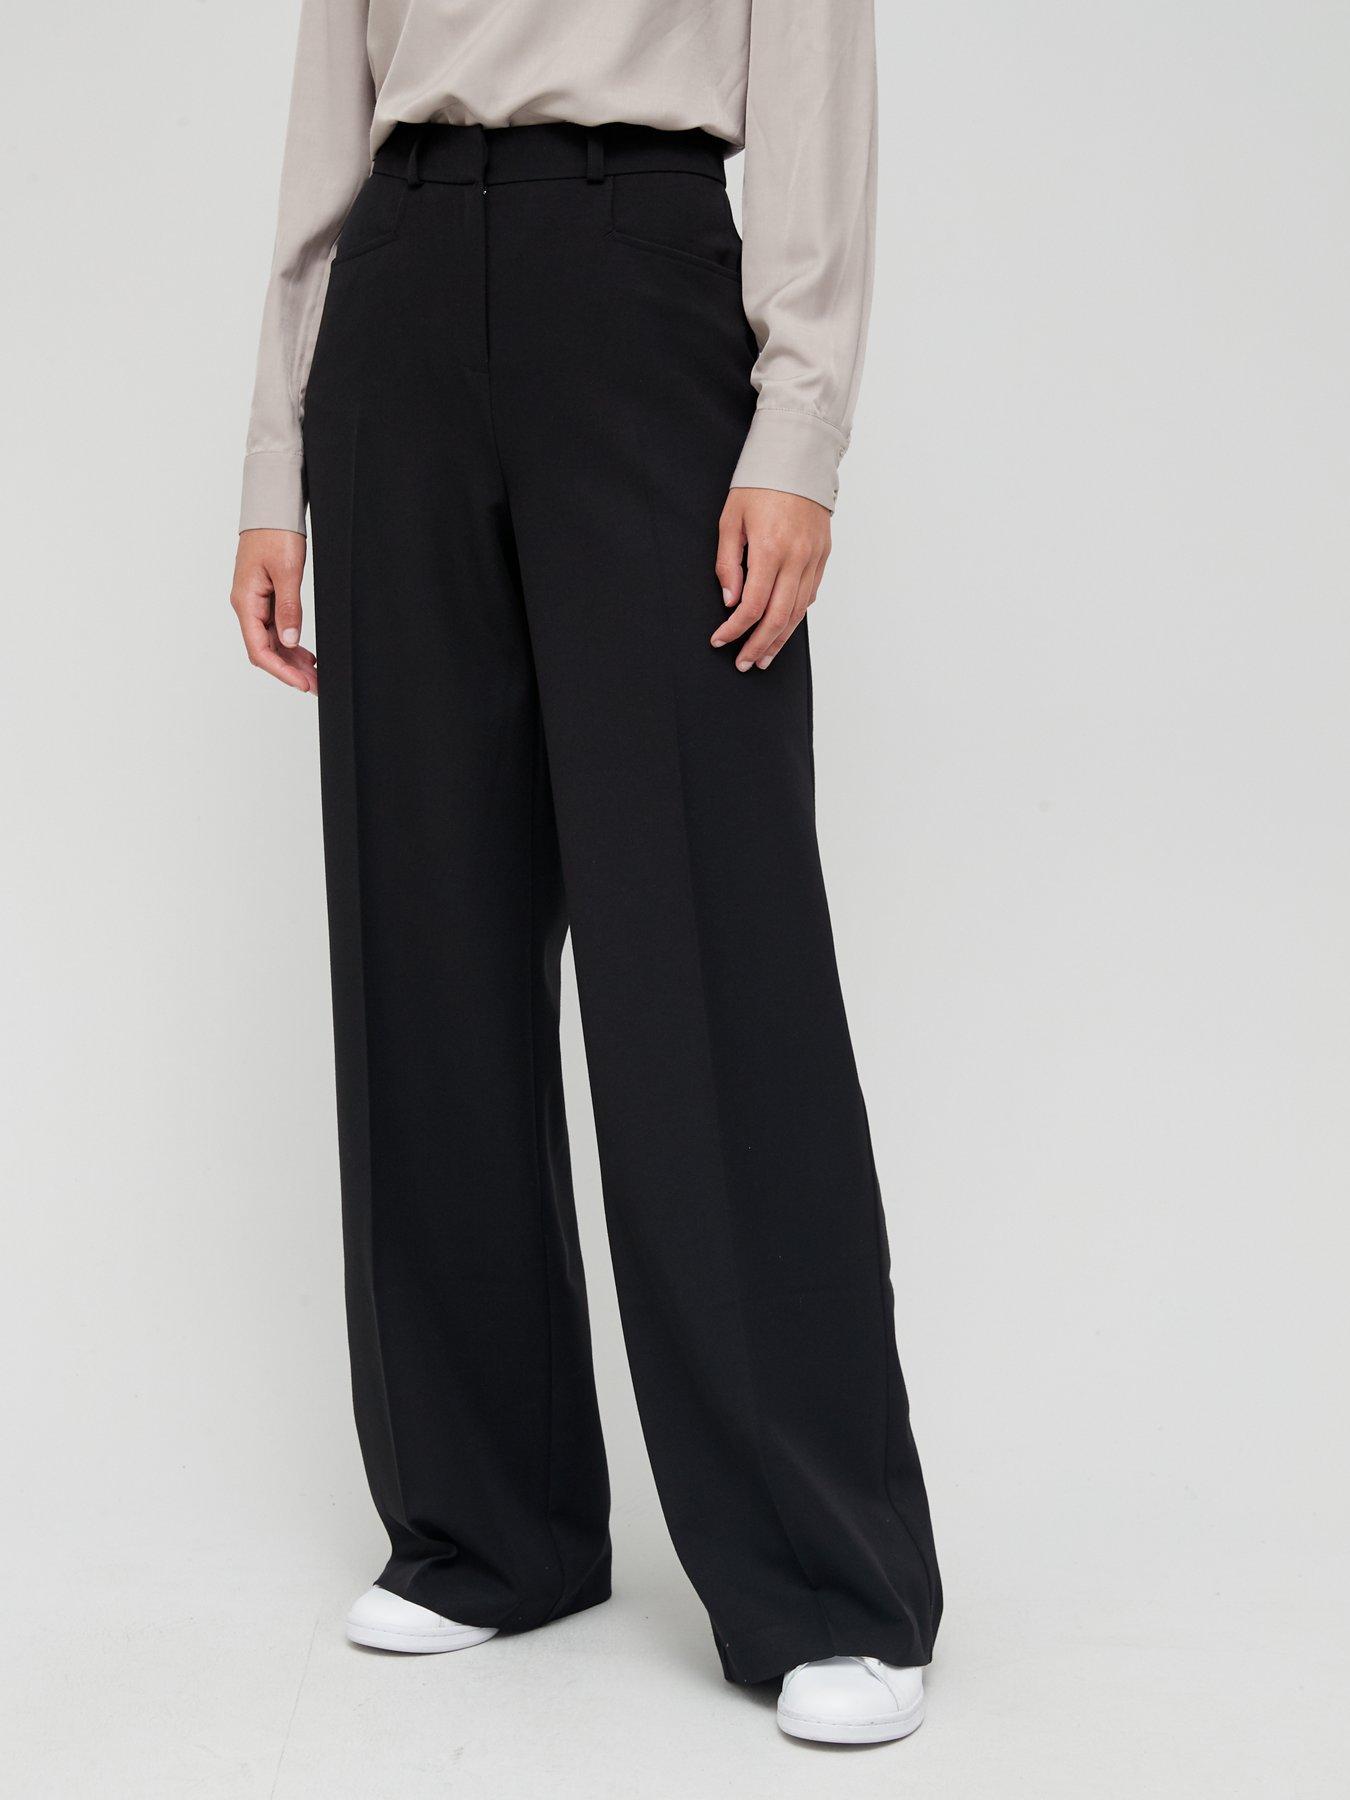 Women's Meta Wideleg, Charcoal Tailored Pants